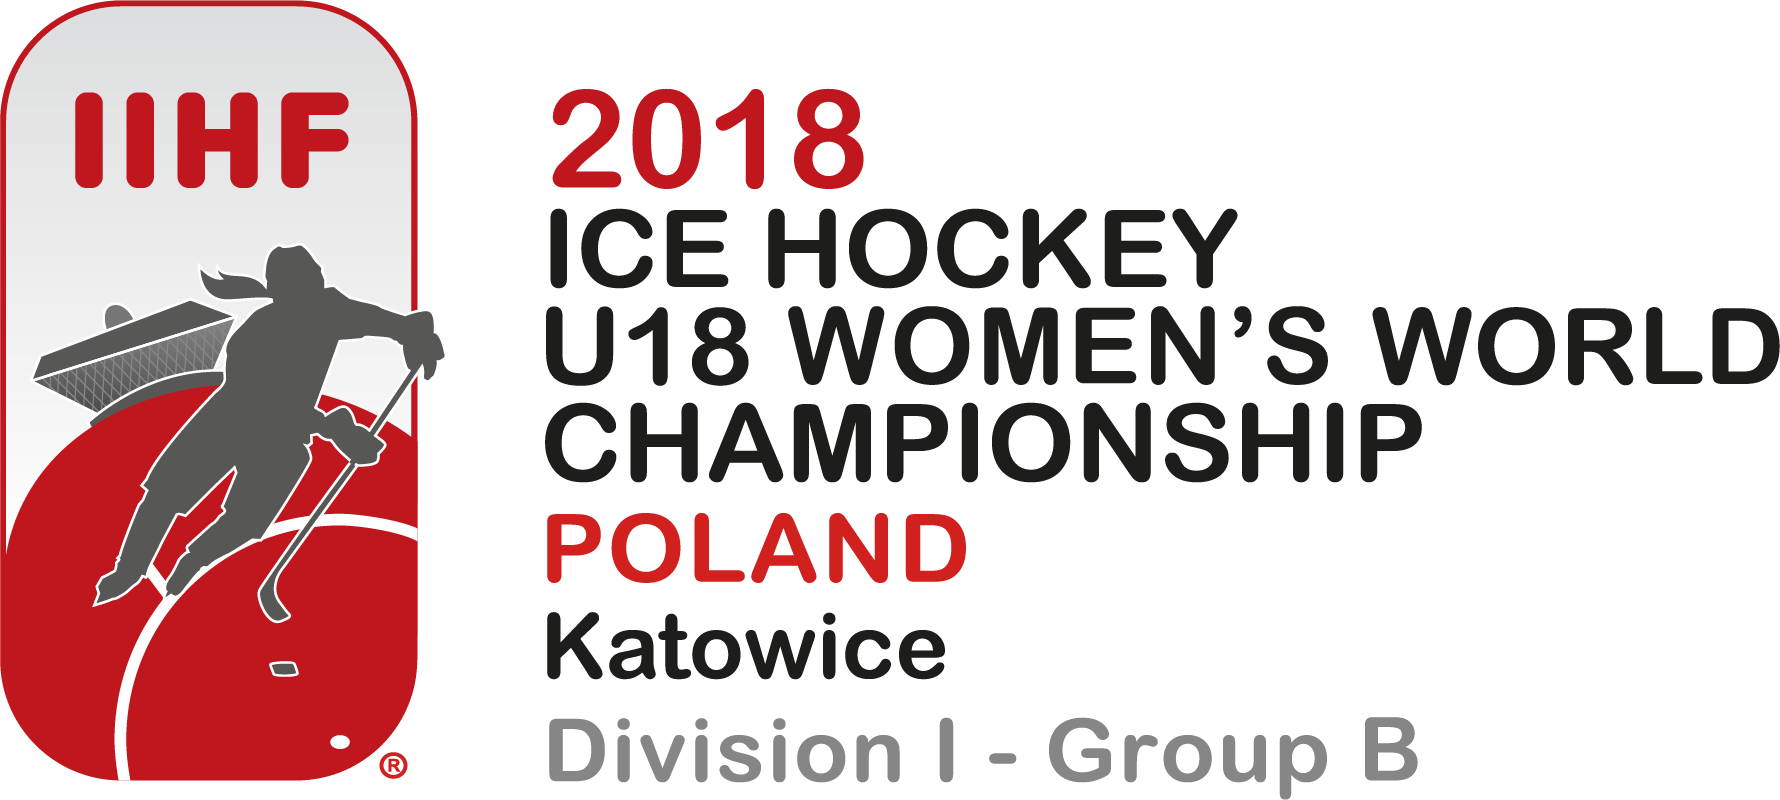 U18 Women's World Championship Division I Group B - Poland